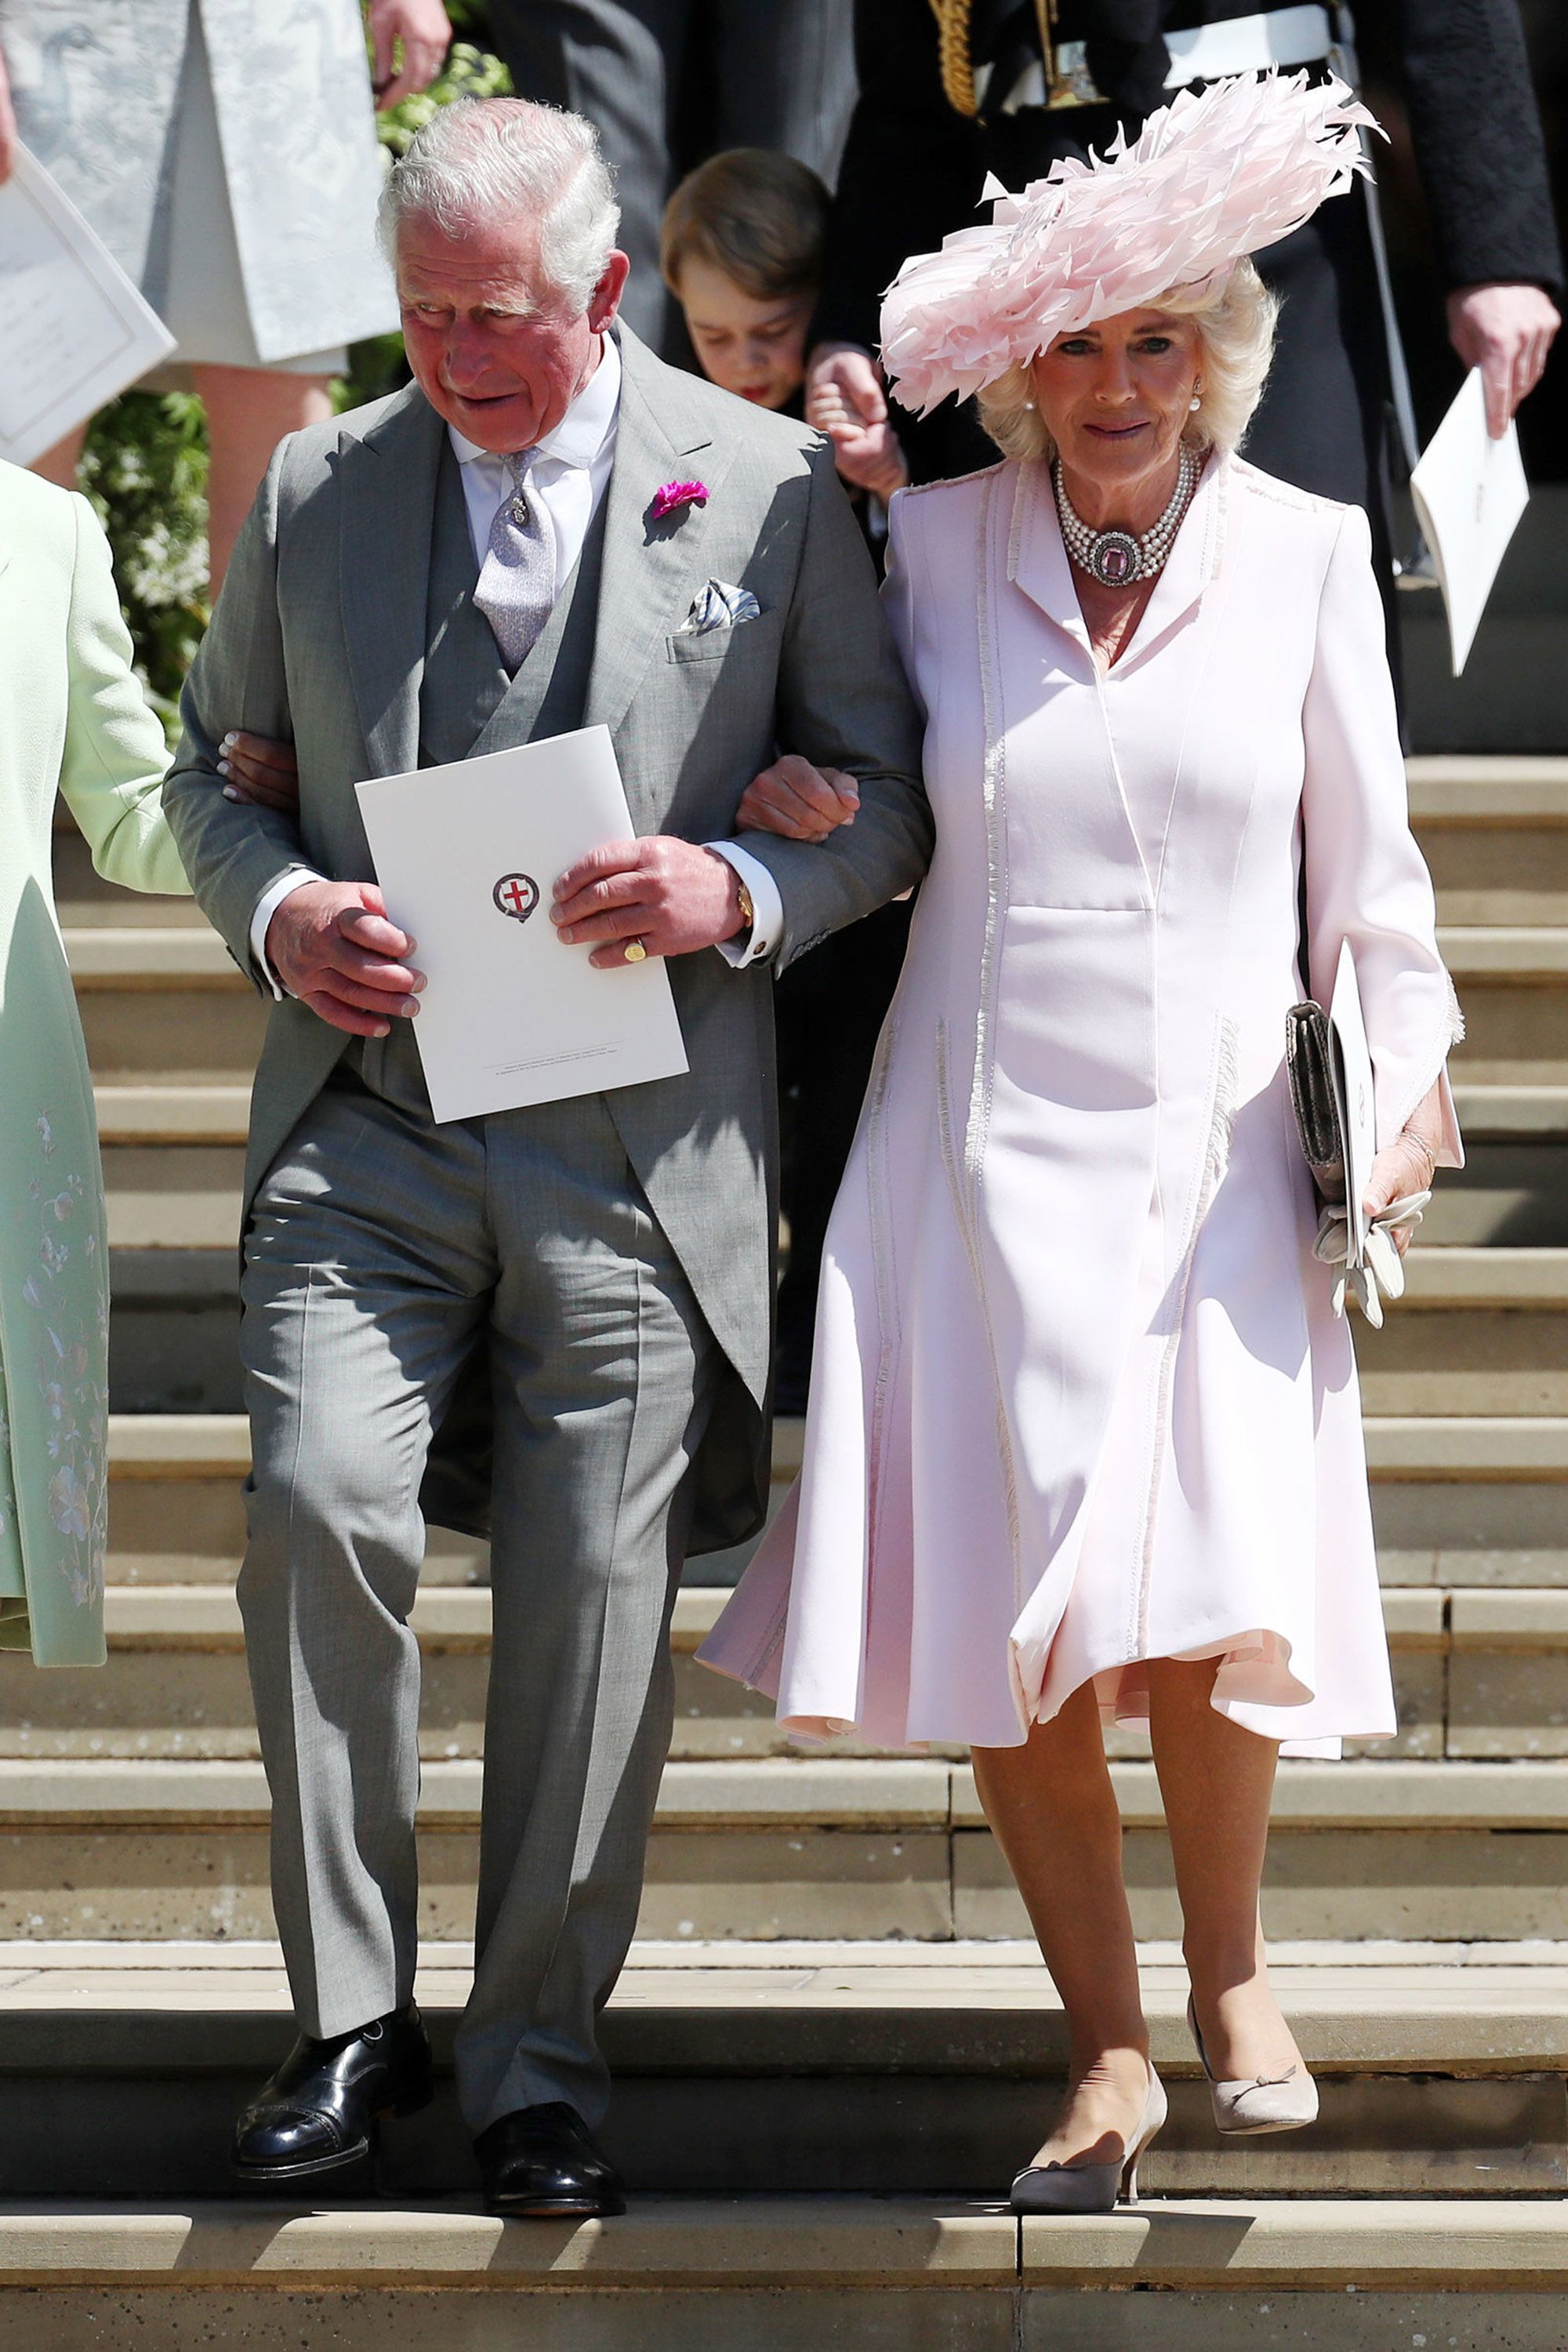 Image for the royal wedding prince harry meghan markle camilla